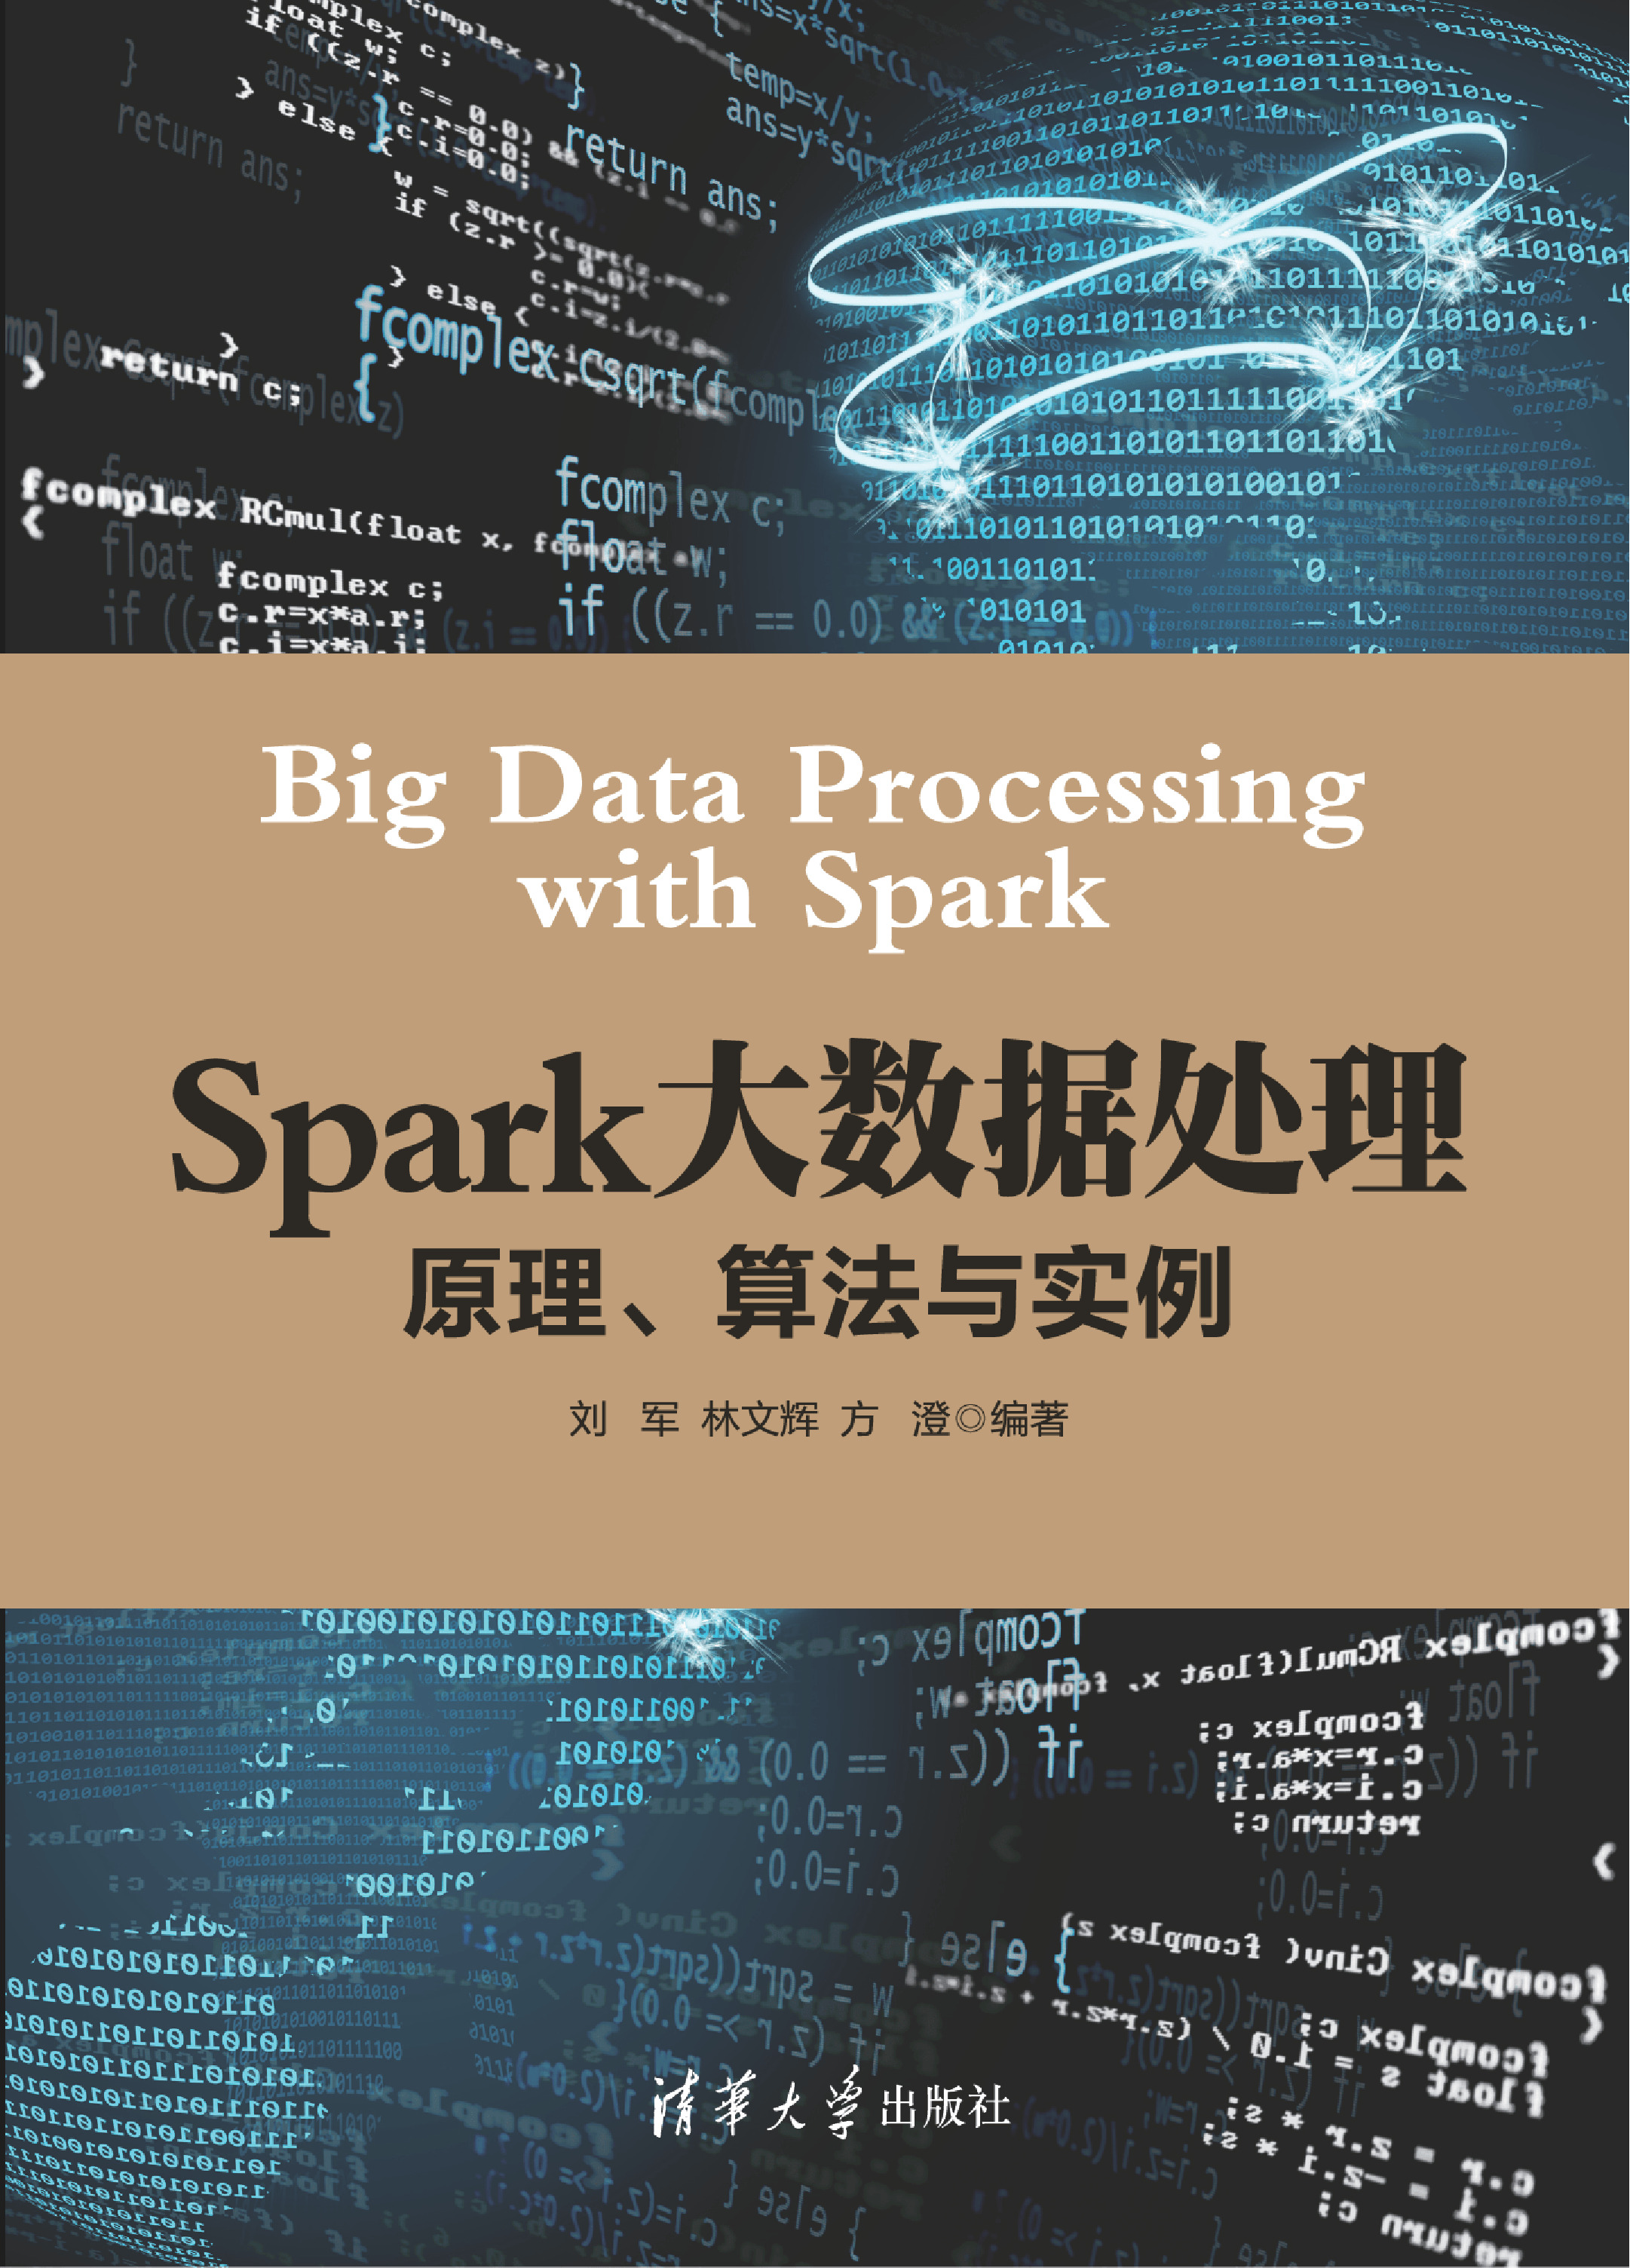 Spark大数据处理： 原理、算法与实例